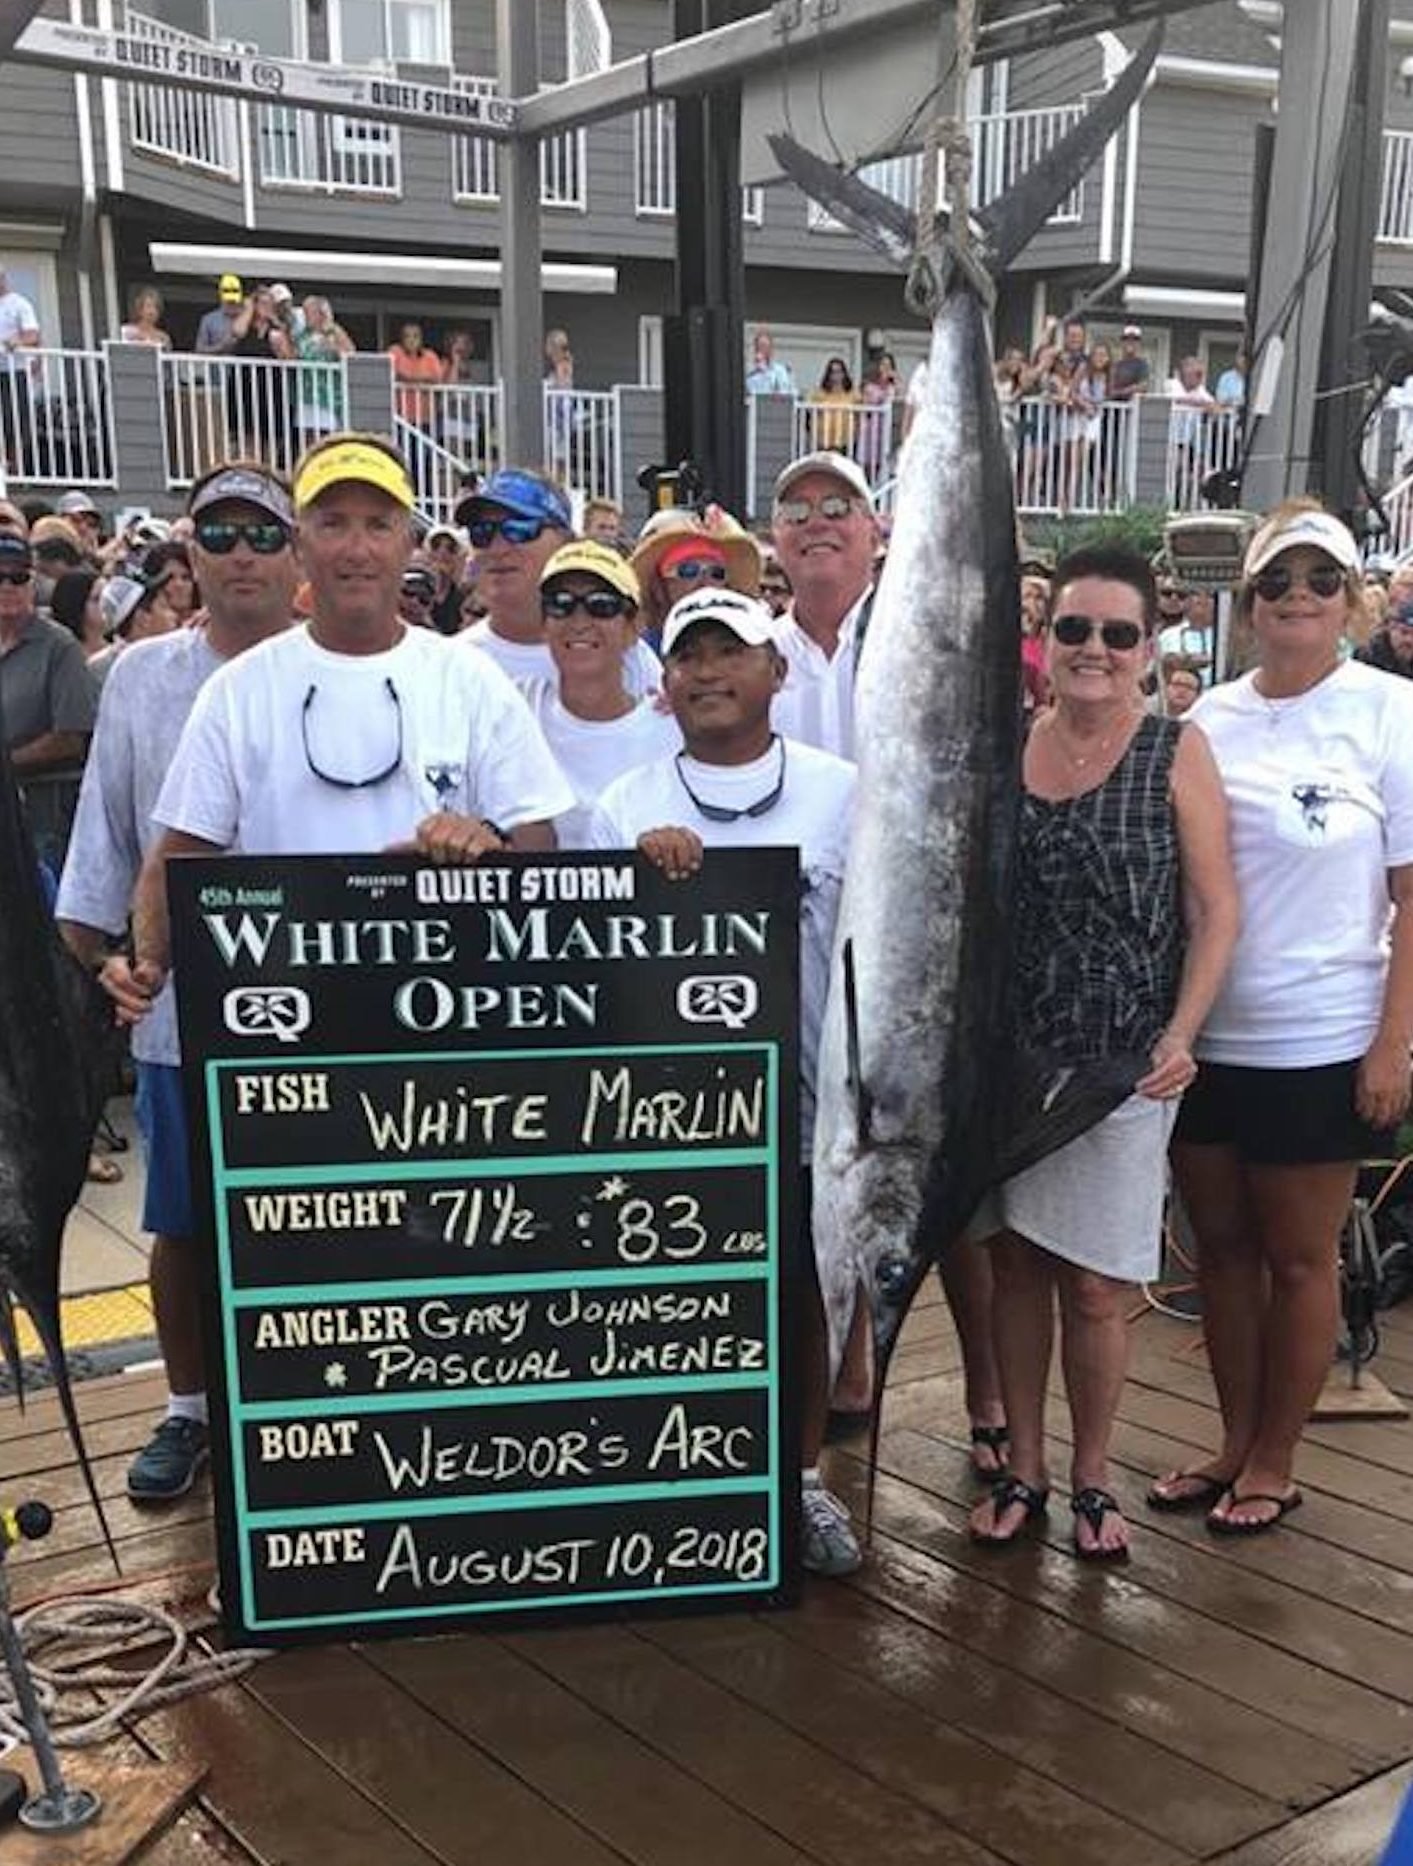 83 LB White Marlin Wins Over $2.5 Million in 45th Annual White Marlin Open